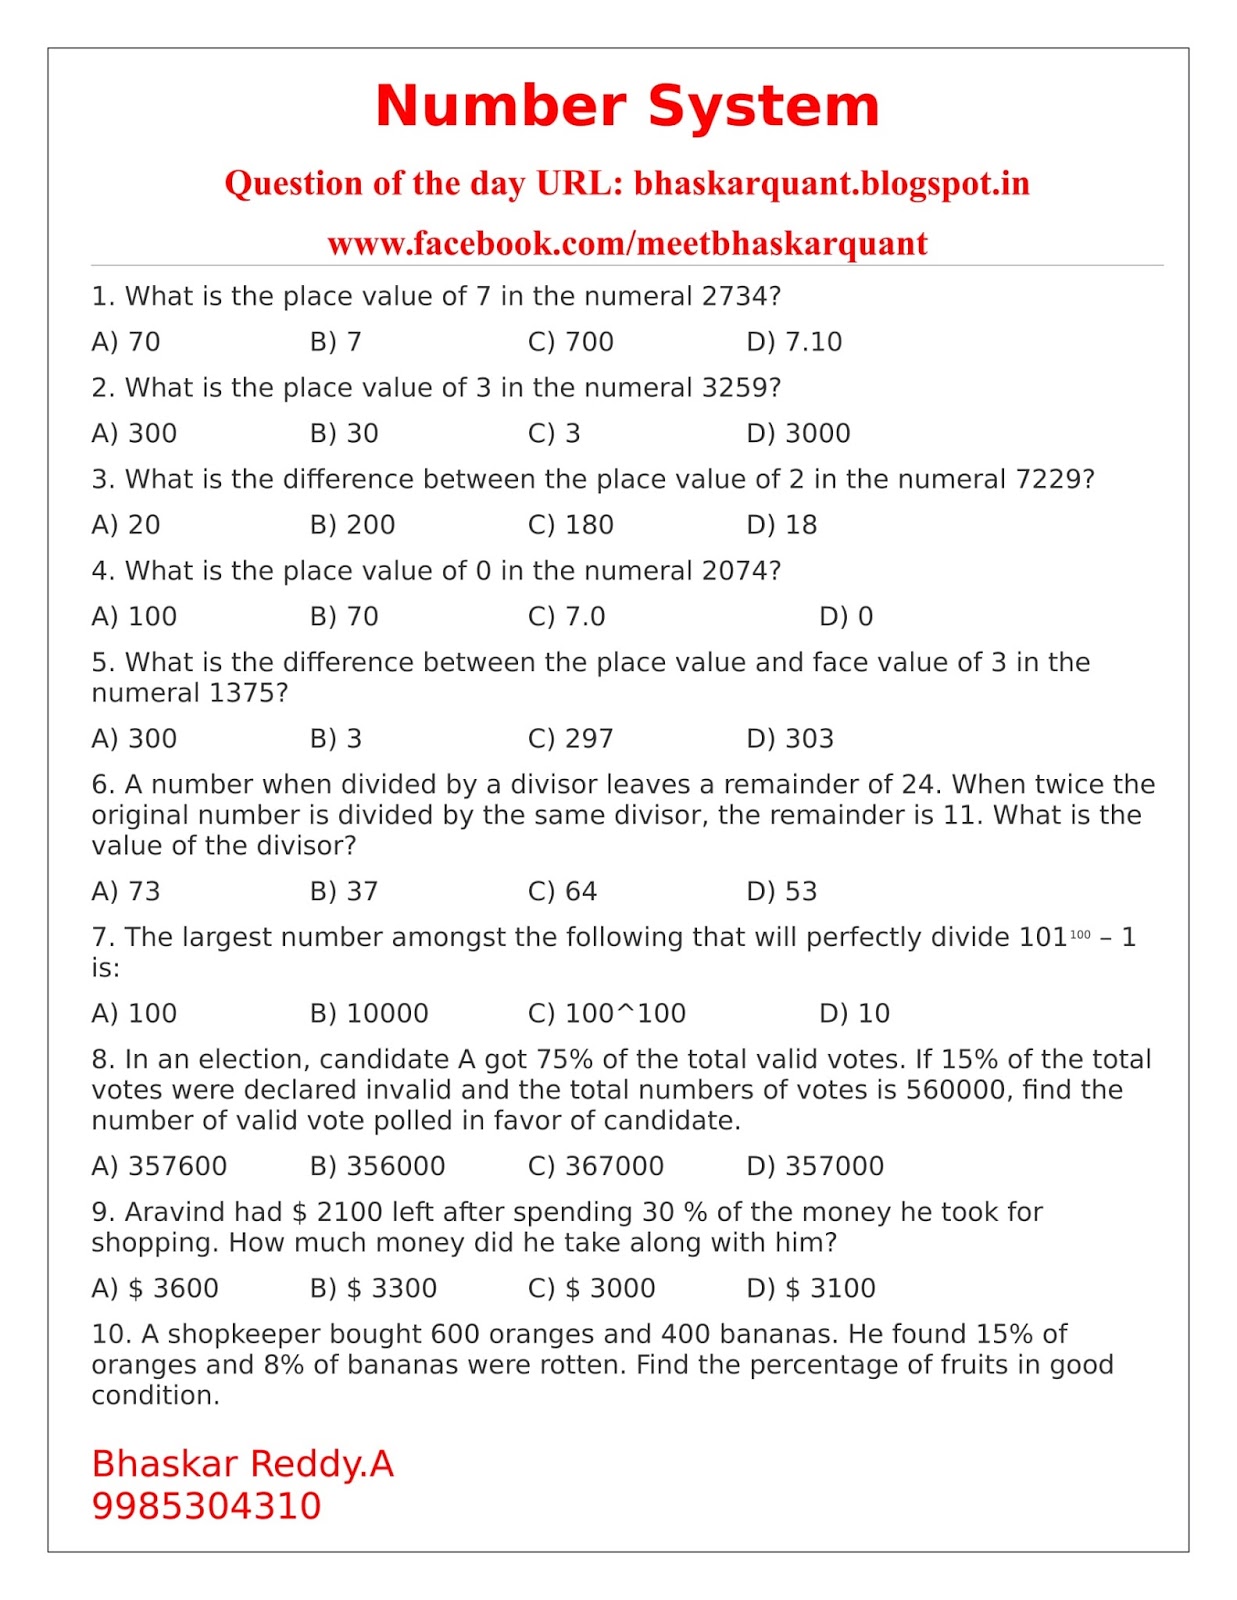 Bhaskar Reddy Ankireddypalli Aptitude Classes Number System Sample Questions